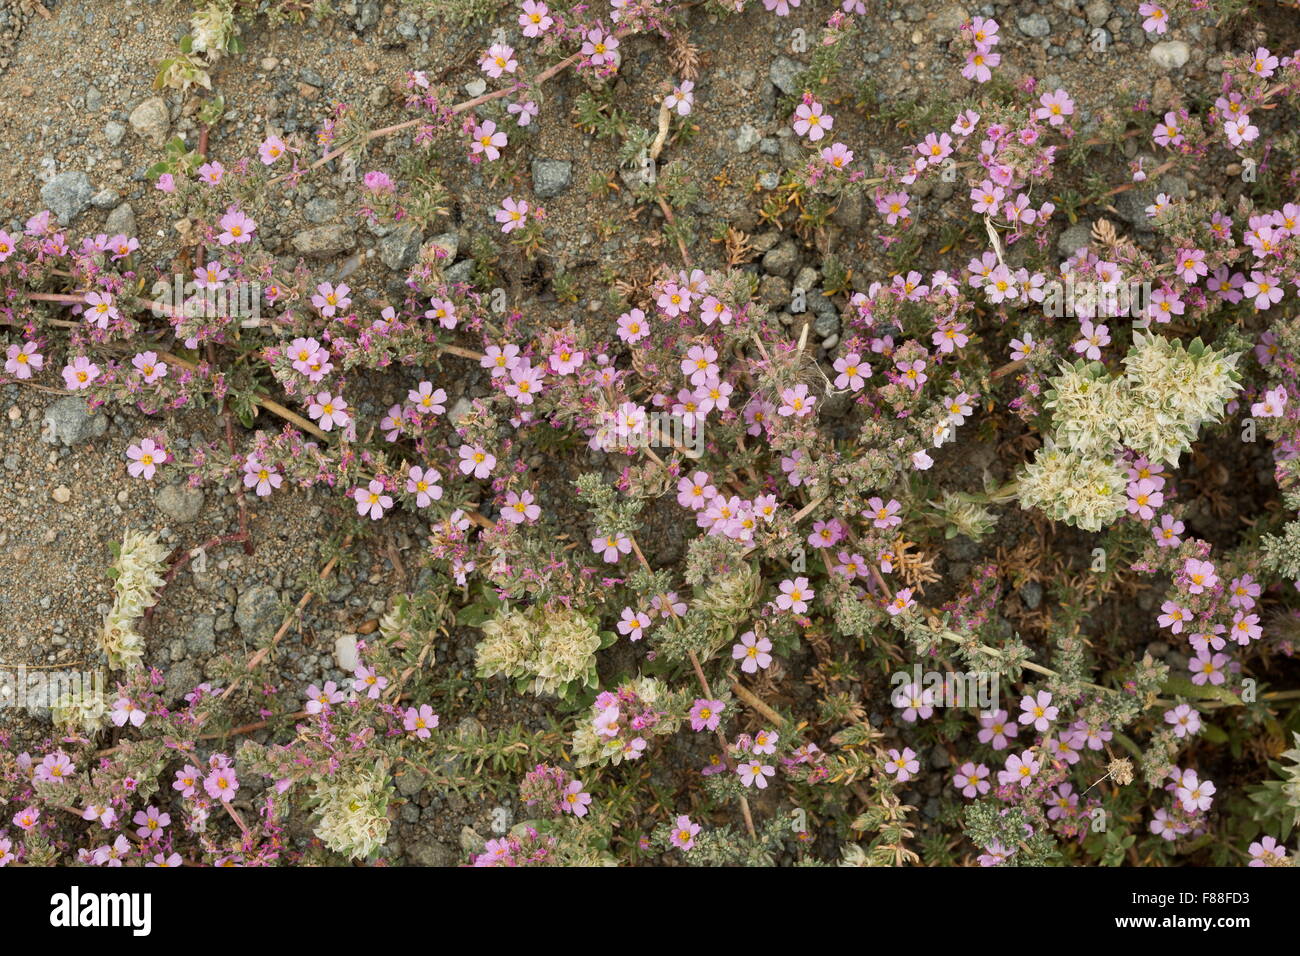 Sea heath, Frankenia laevis in flower in damp saline soil. Stock Photo